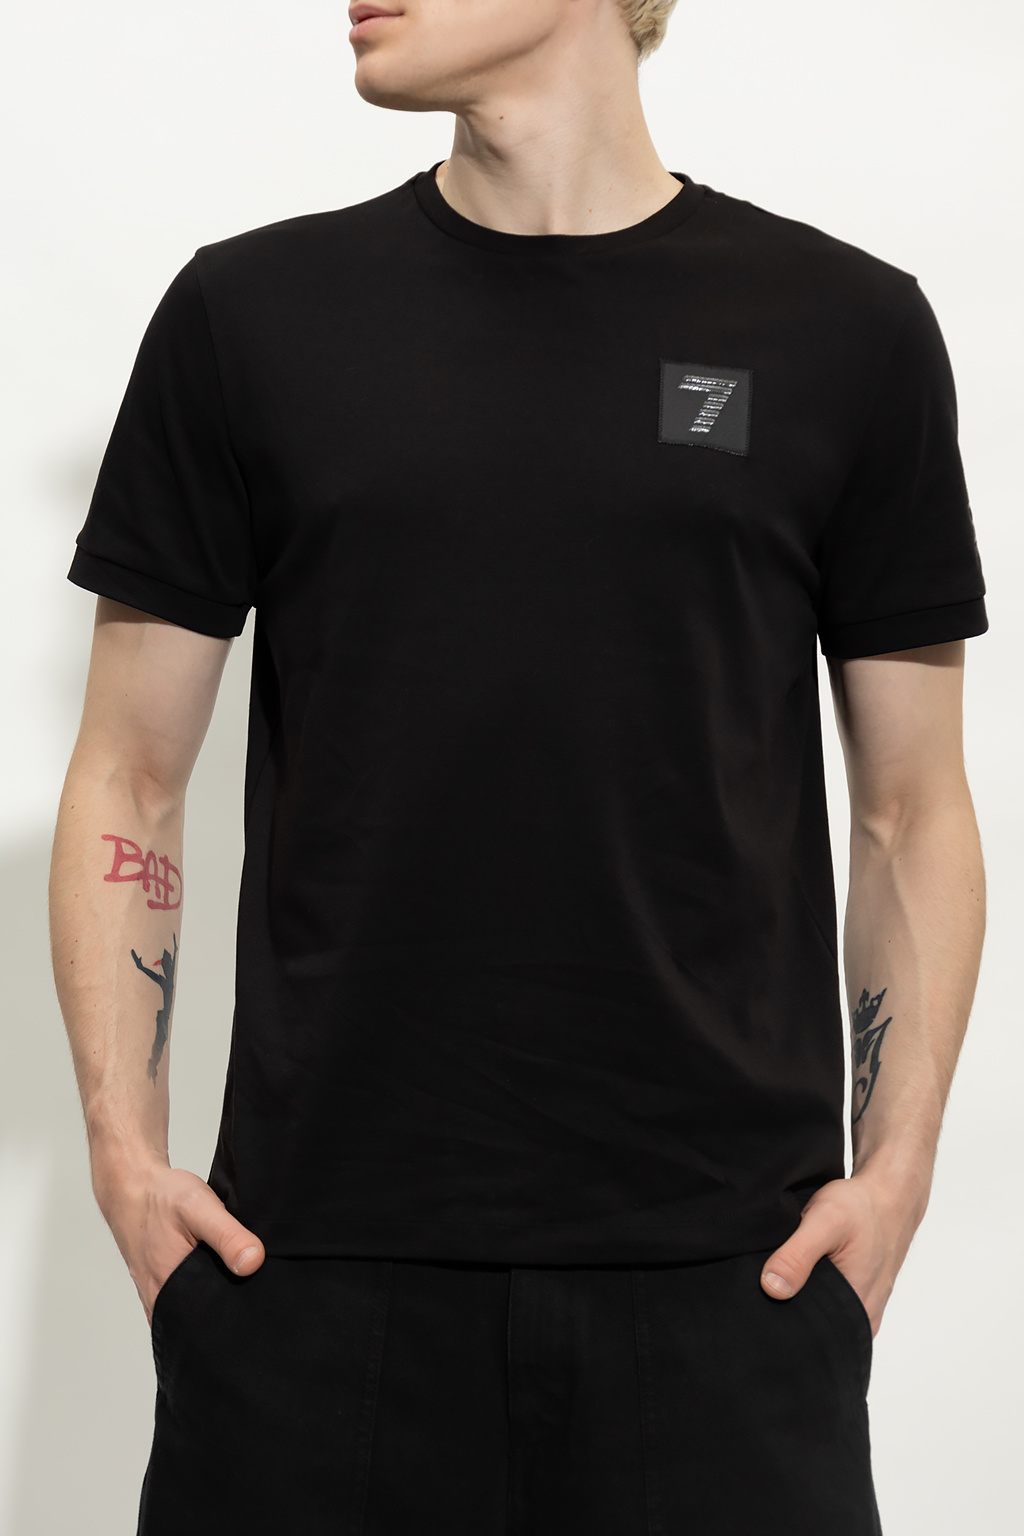 EA7 Emporio Armani emporio armani logo patch regular fit t shirt item